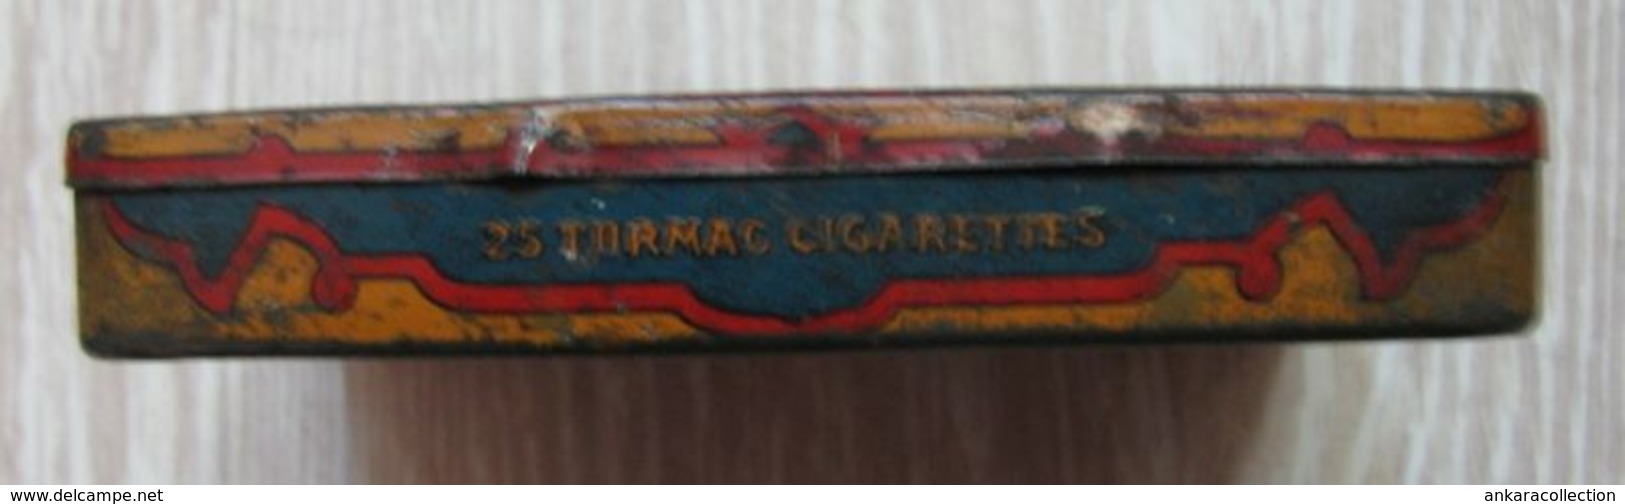 AC - TURMAC ORANGE CIGARETTE TOBACCO EMPTY VINTAGE TIN BOX